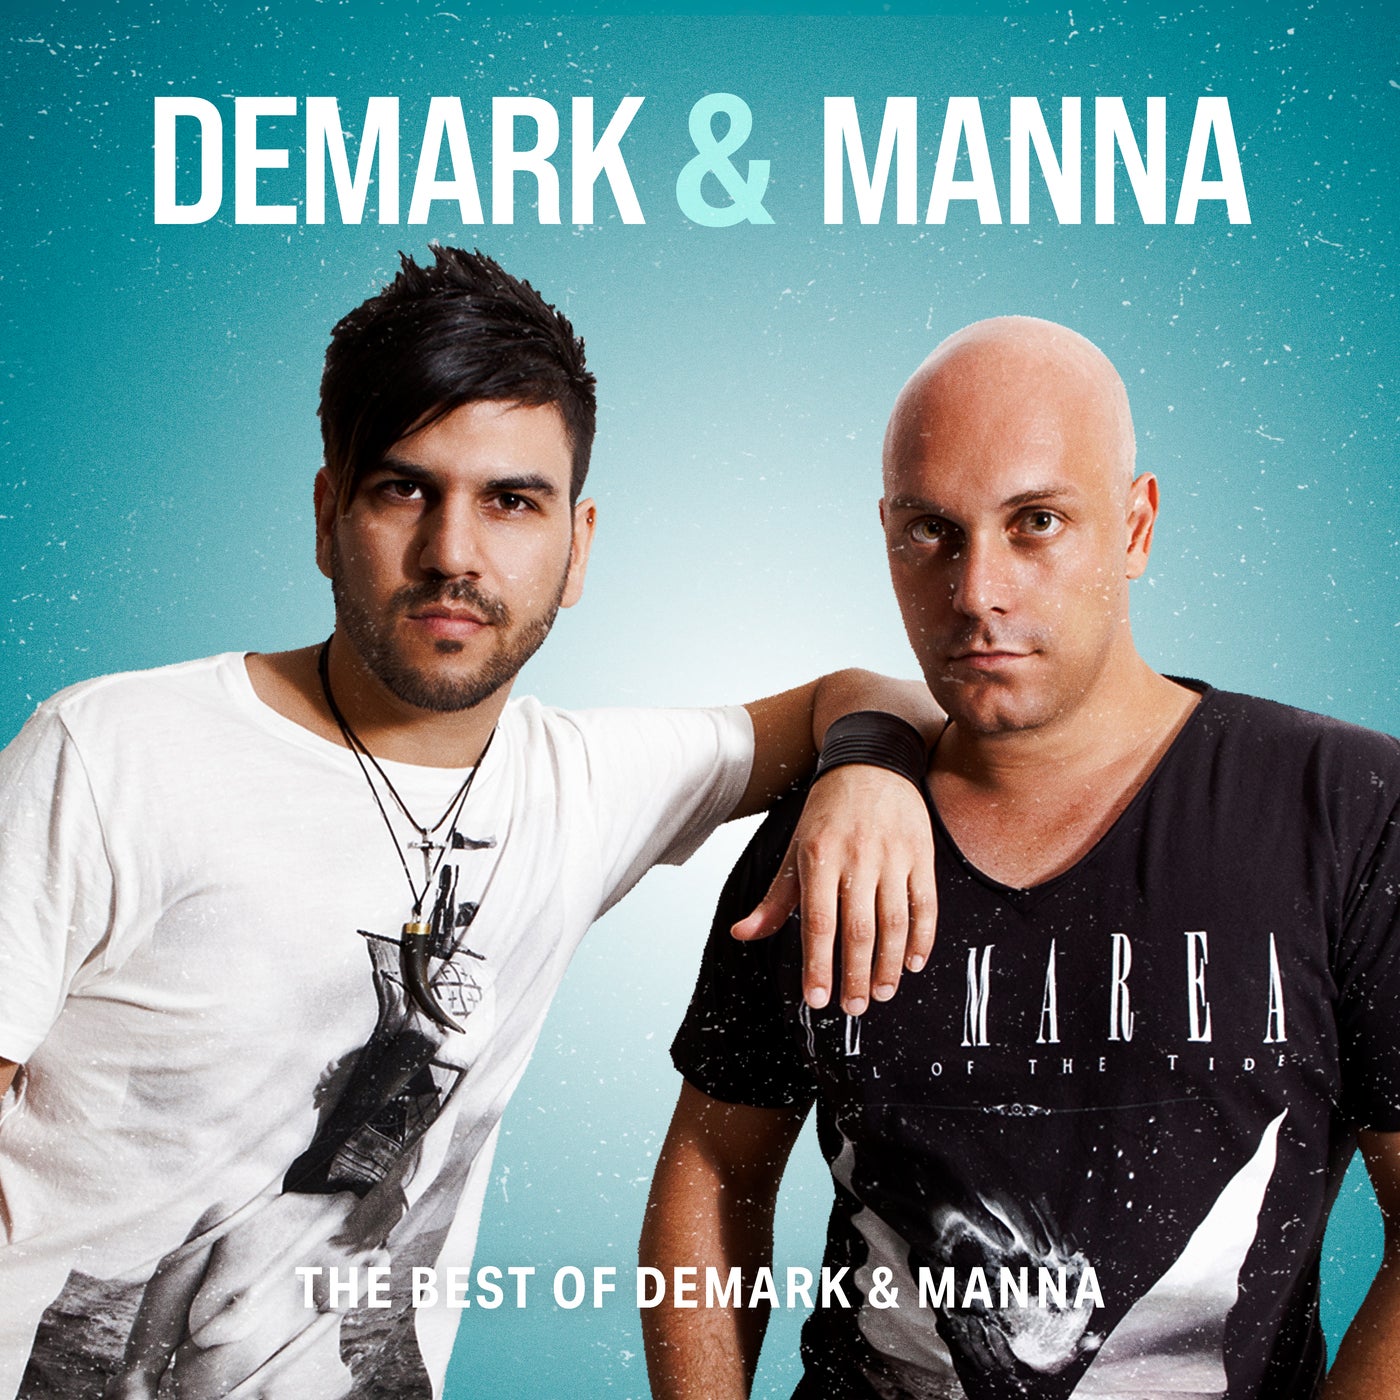 The Best of Demark & Manna